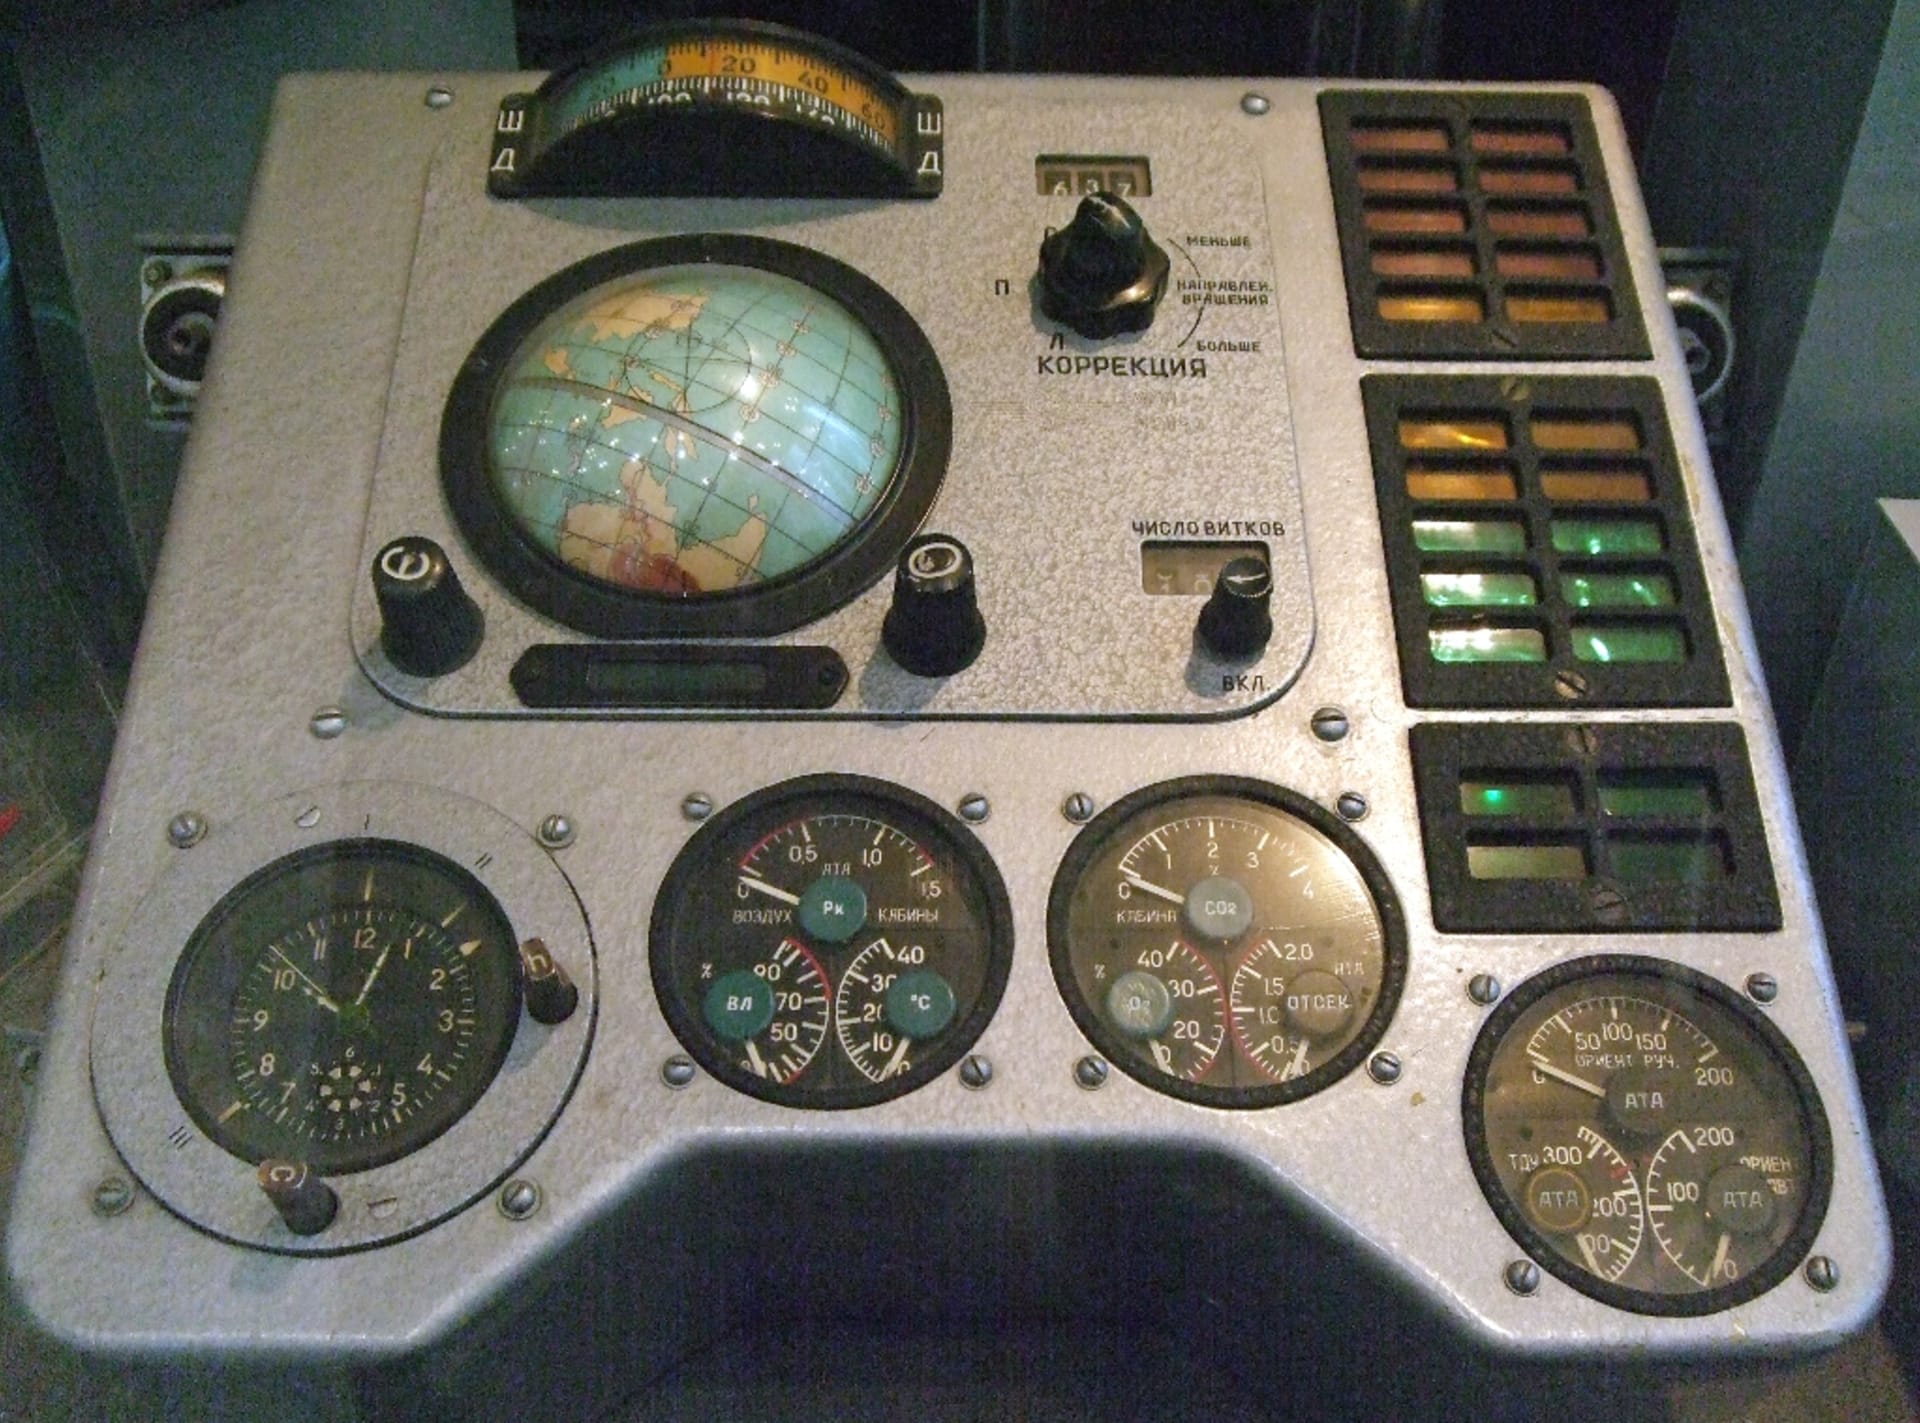 Ovládací panel Gagarinovy lodi Vostok 1